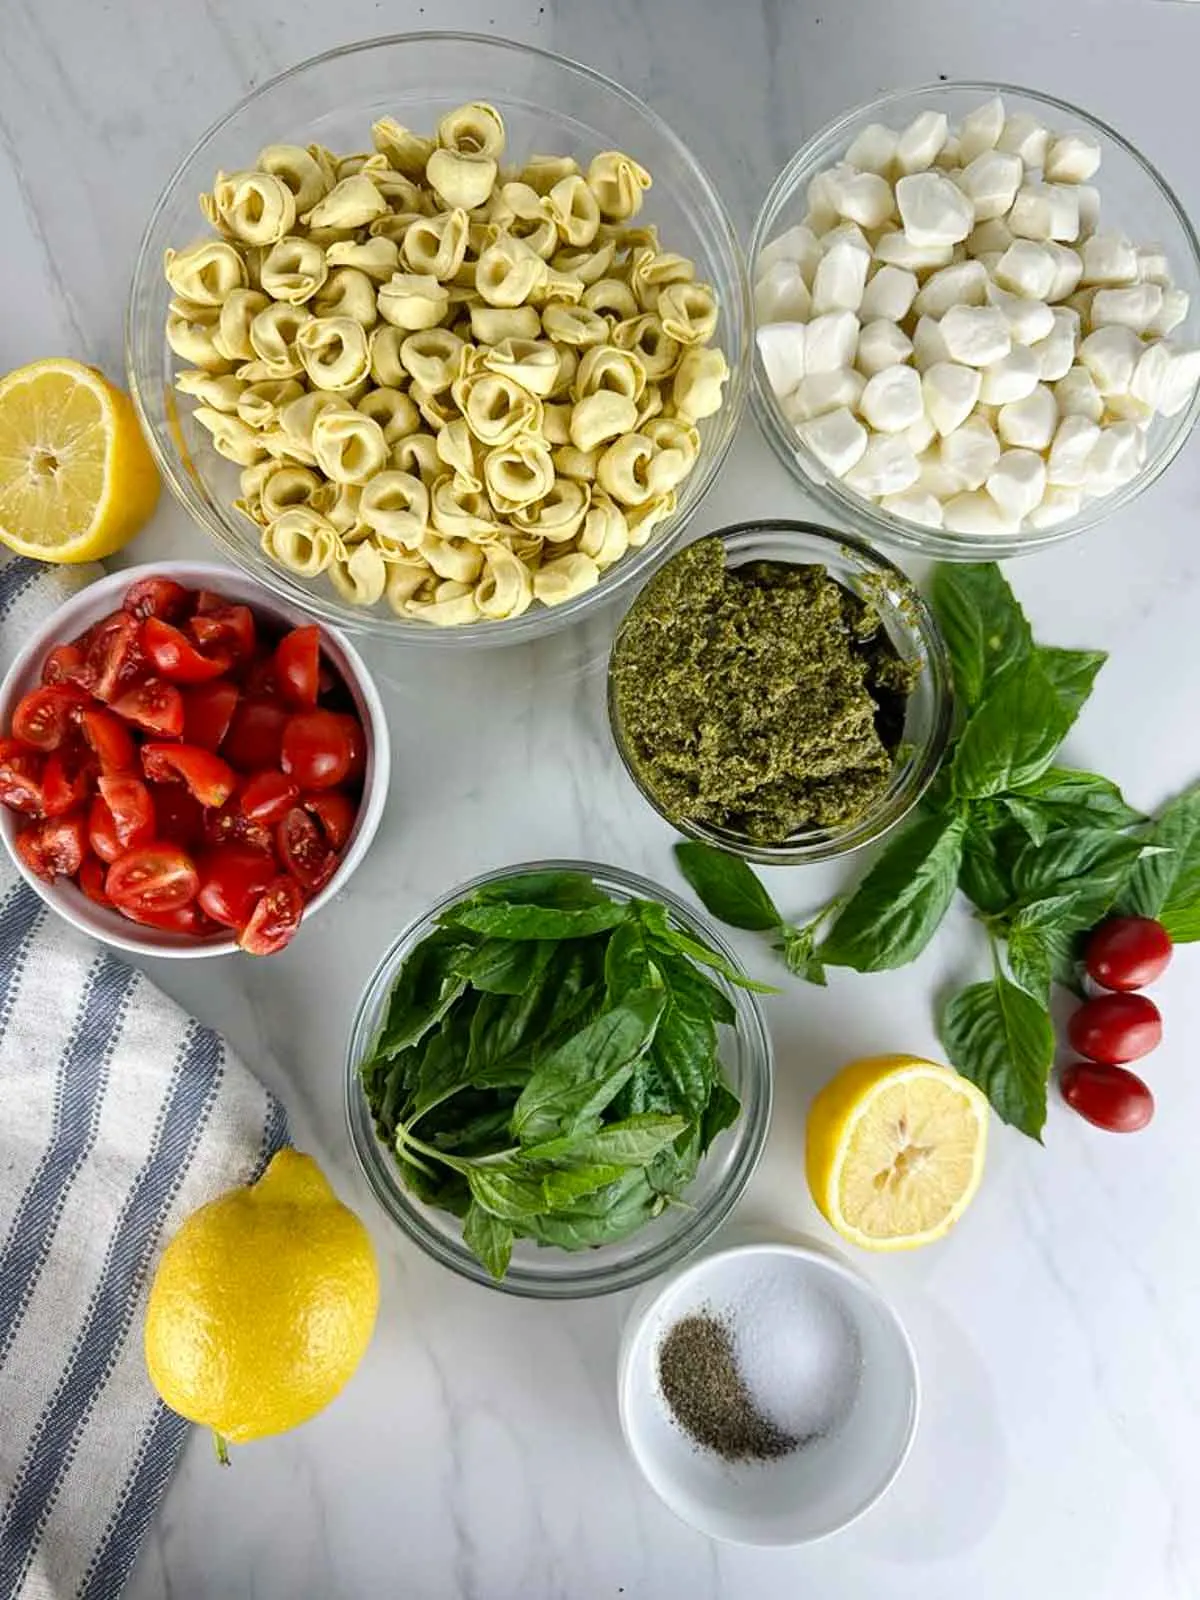 Ingredients for Caprese Tortellini Pasta Salad with Pest: Tortellini, Mozzarella, Tomatoes, Basil, Pesto, Lemon Juice, Salt and Pepper